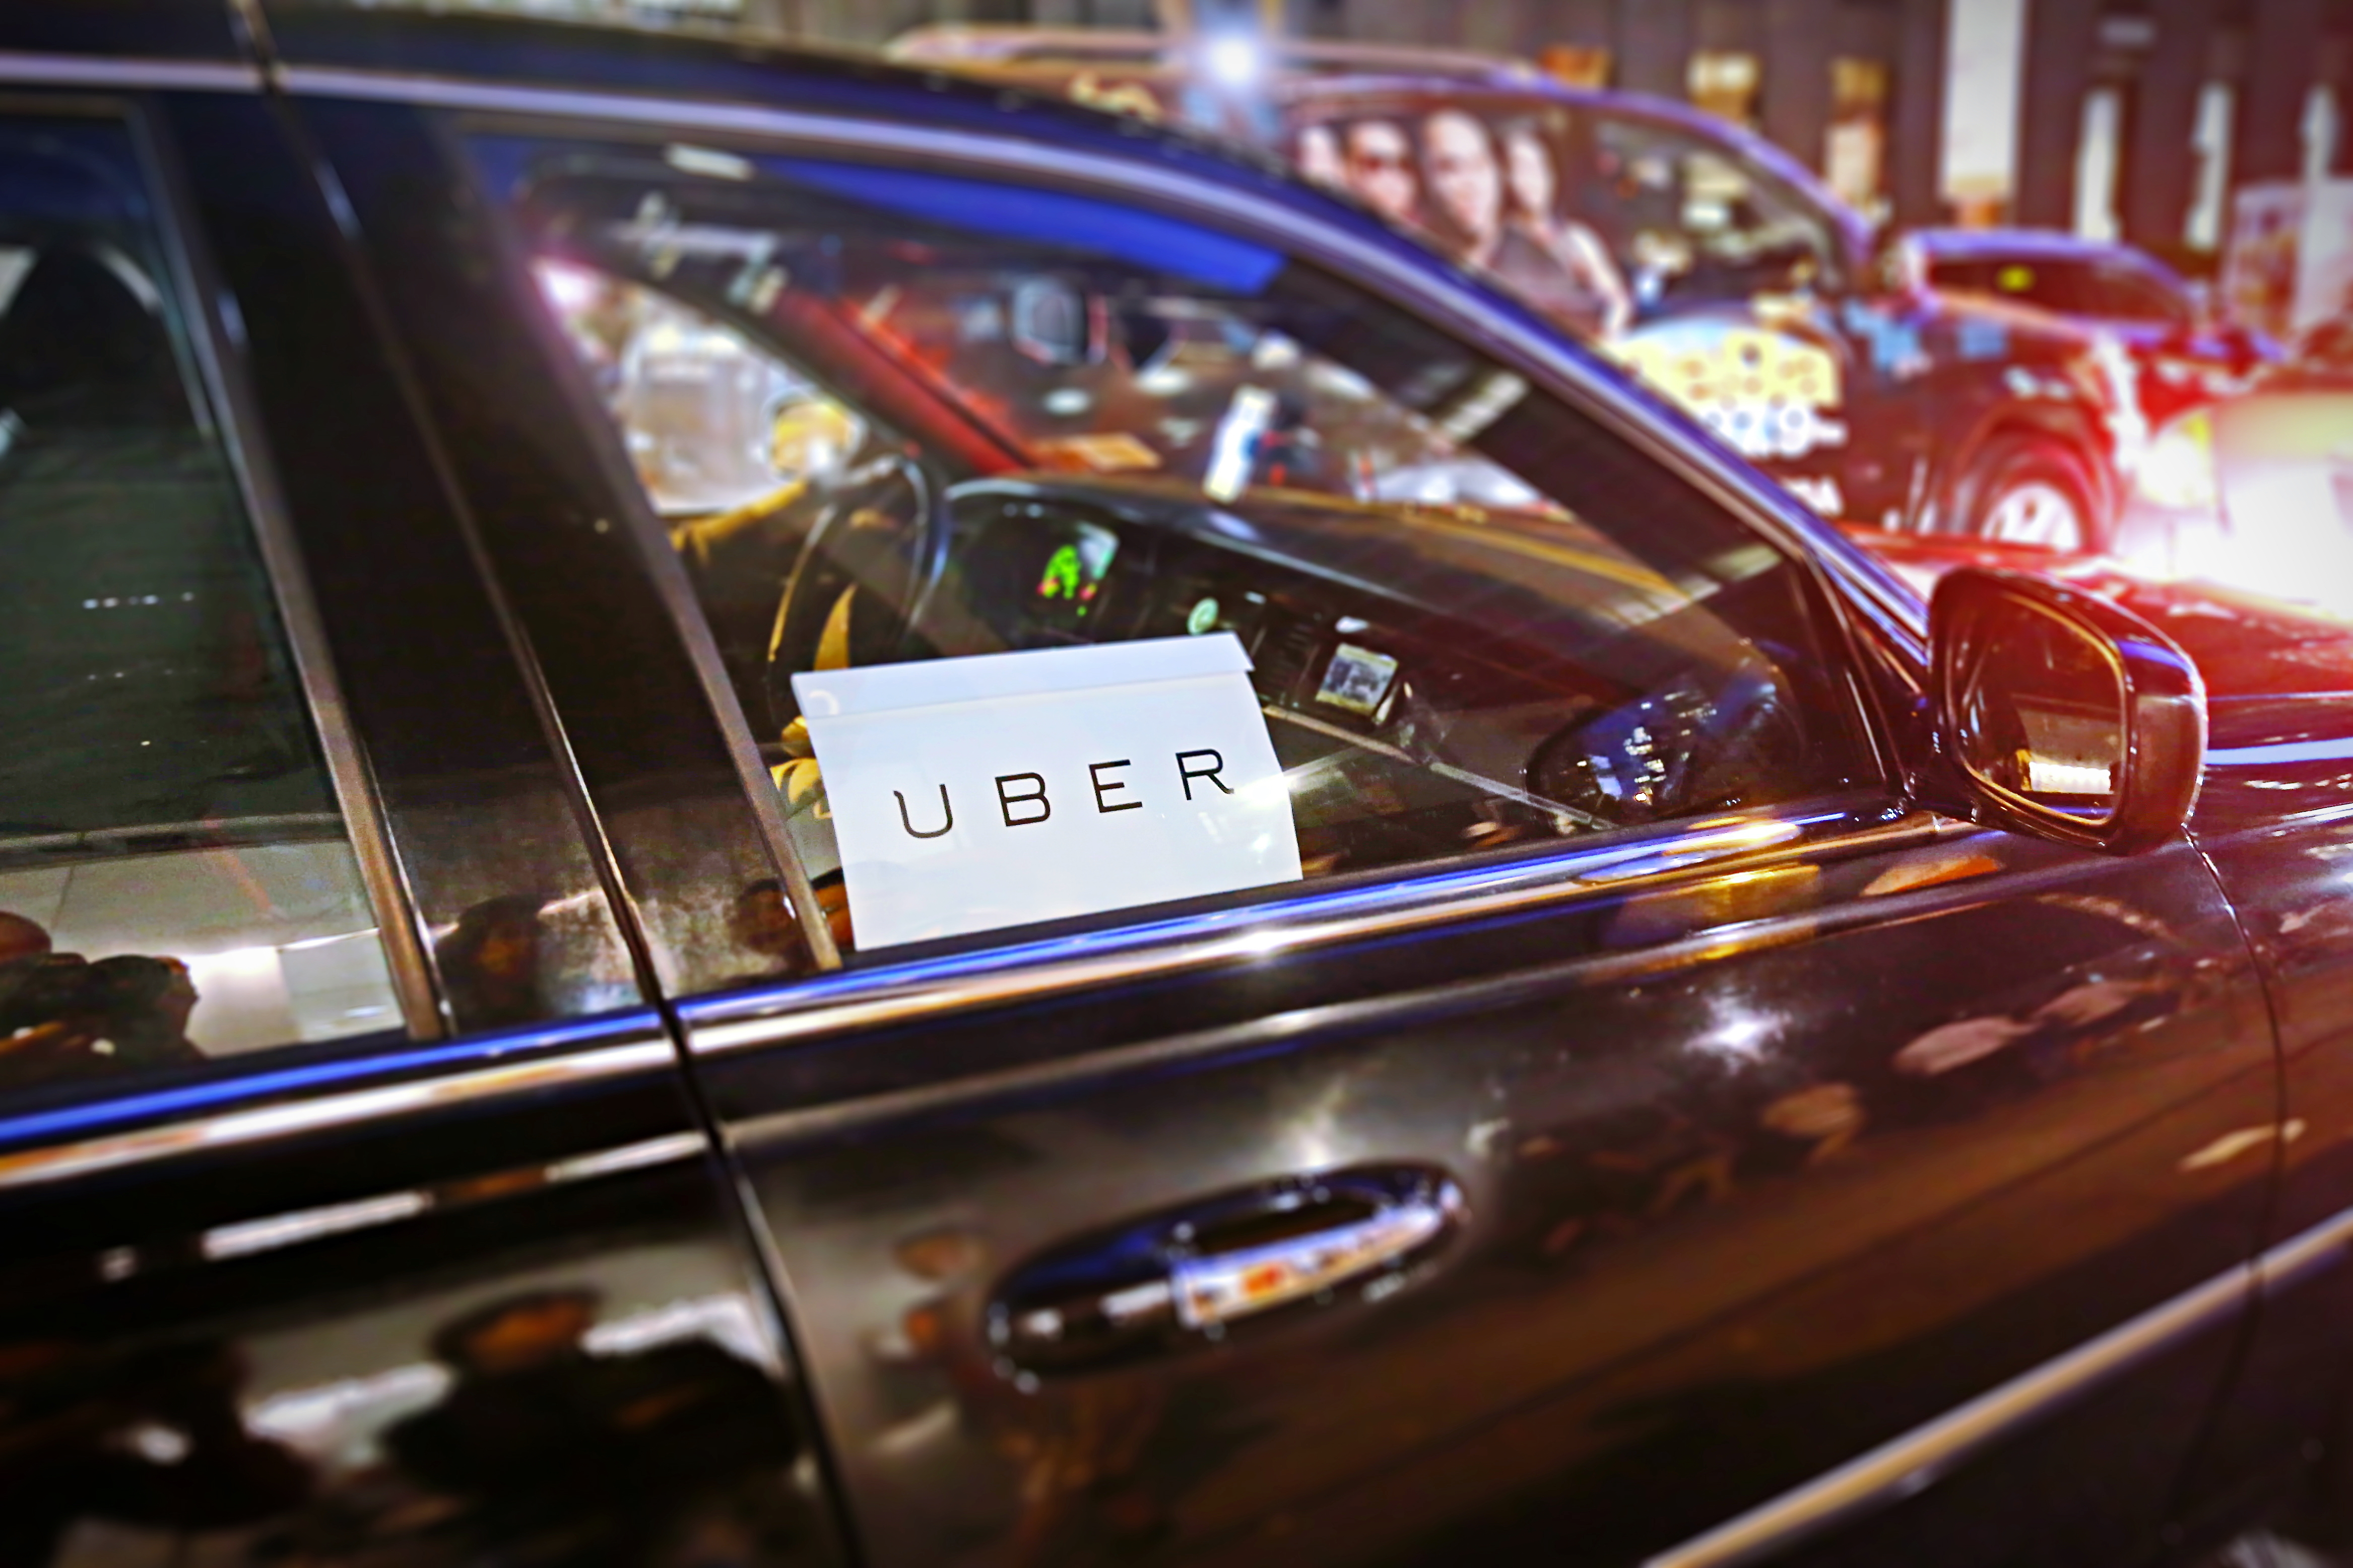 An Uber waits in New York City. Shutterstock image via MikeDotta